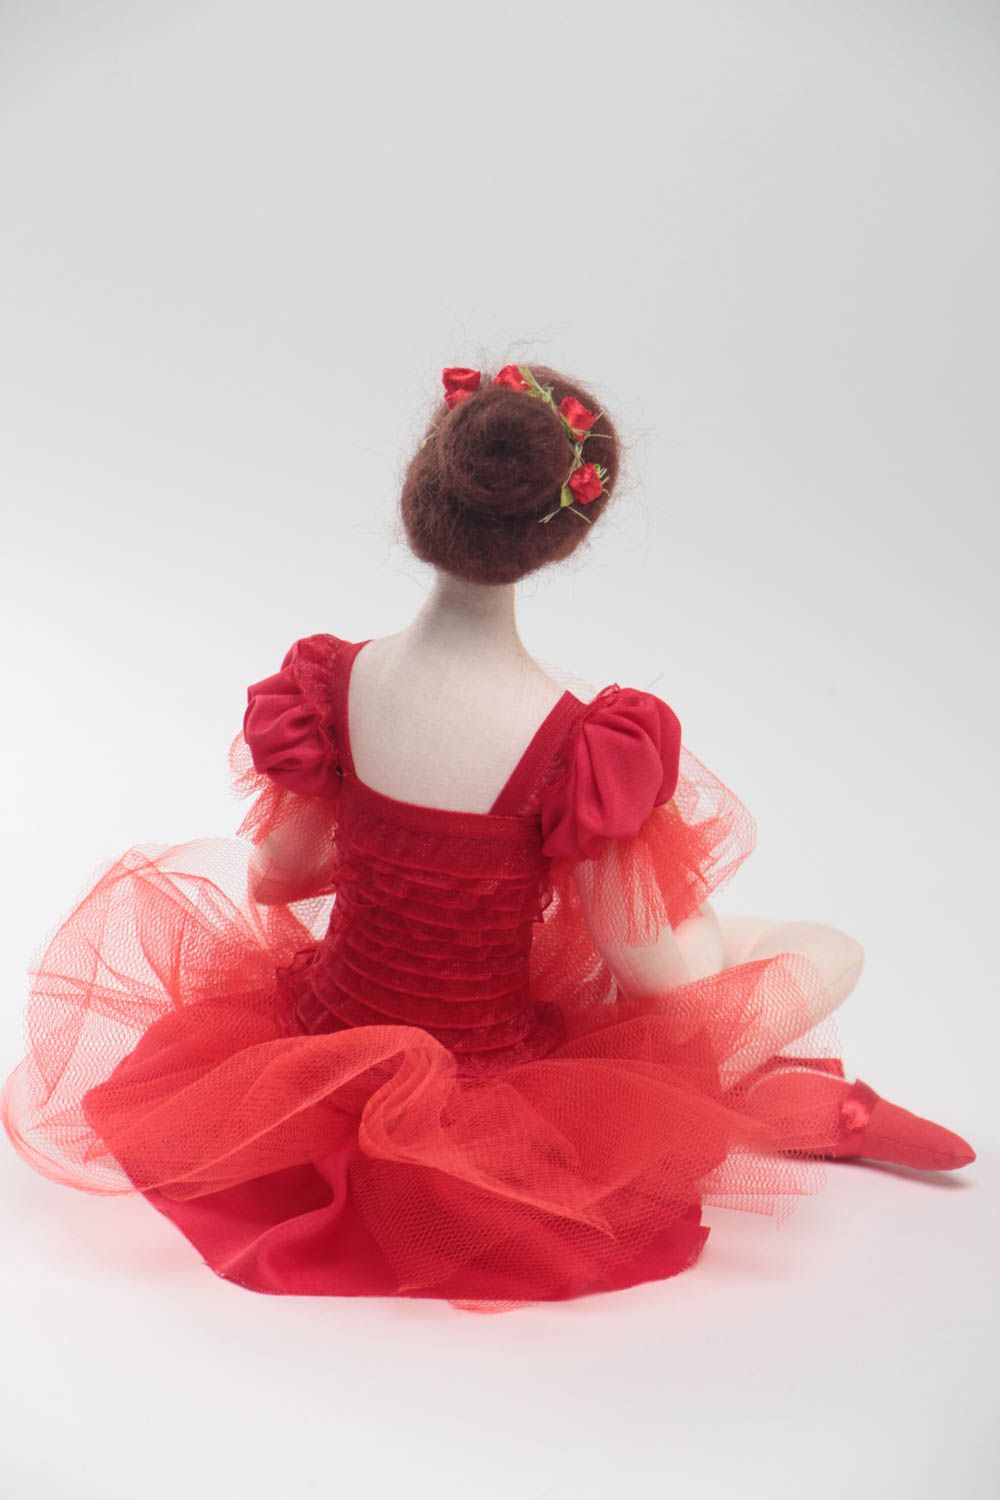 Muñeca bailarina juguete hecho a mano decoración de hogar juguete para niñas foto 4